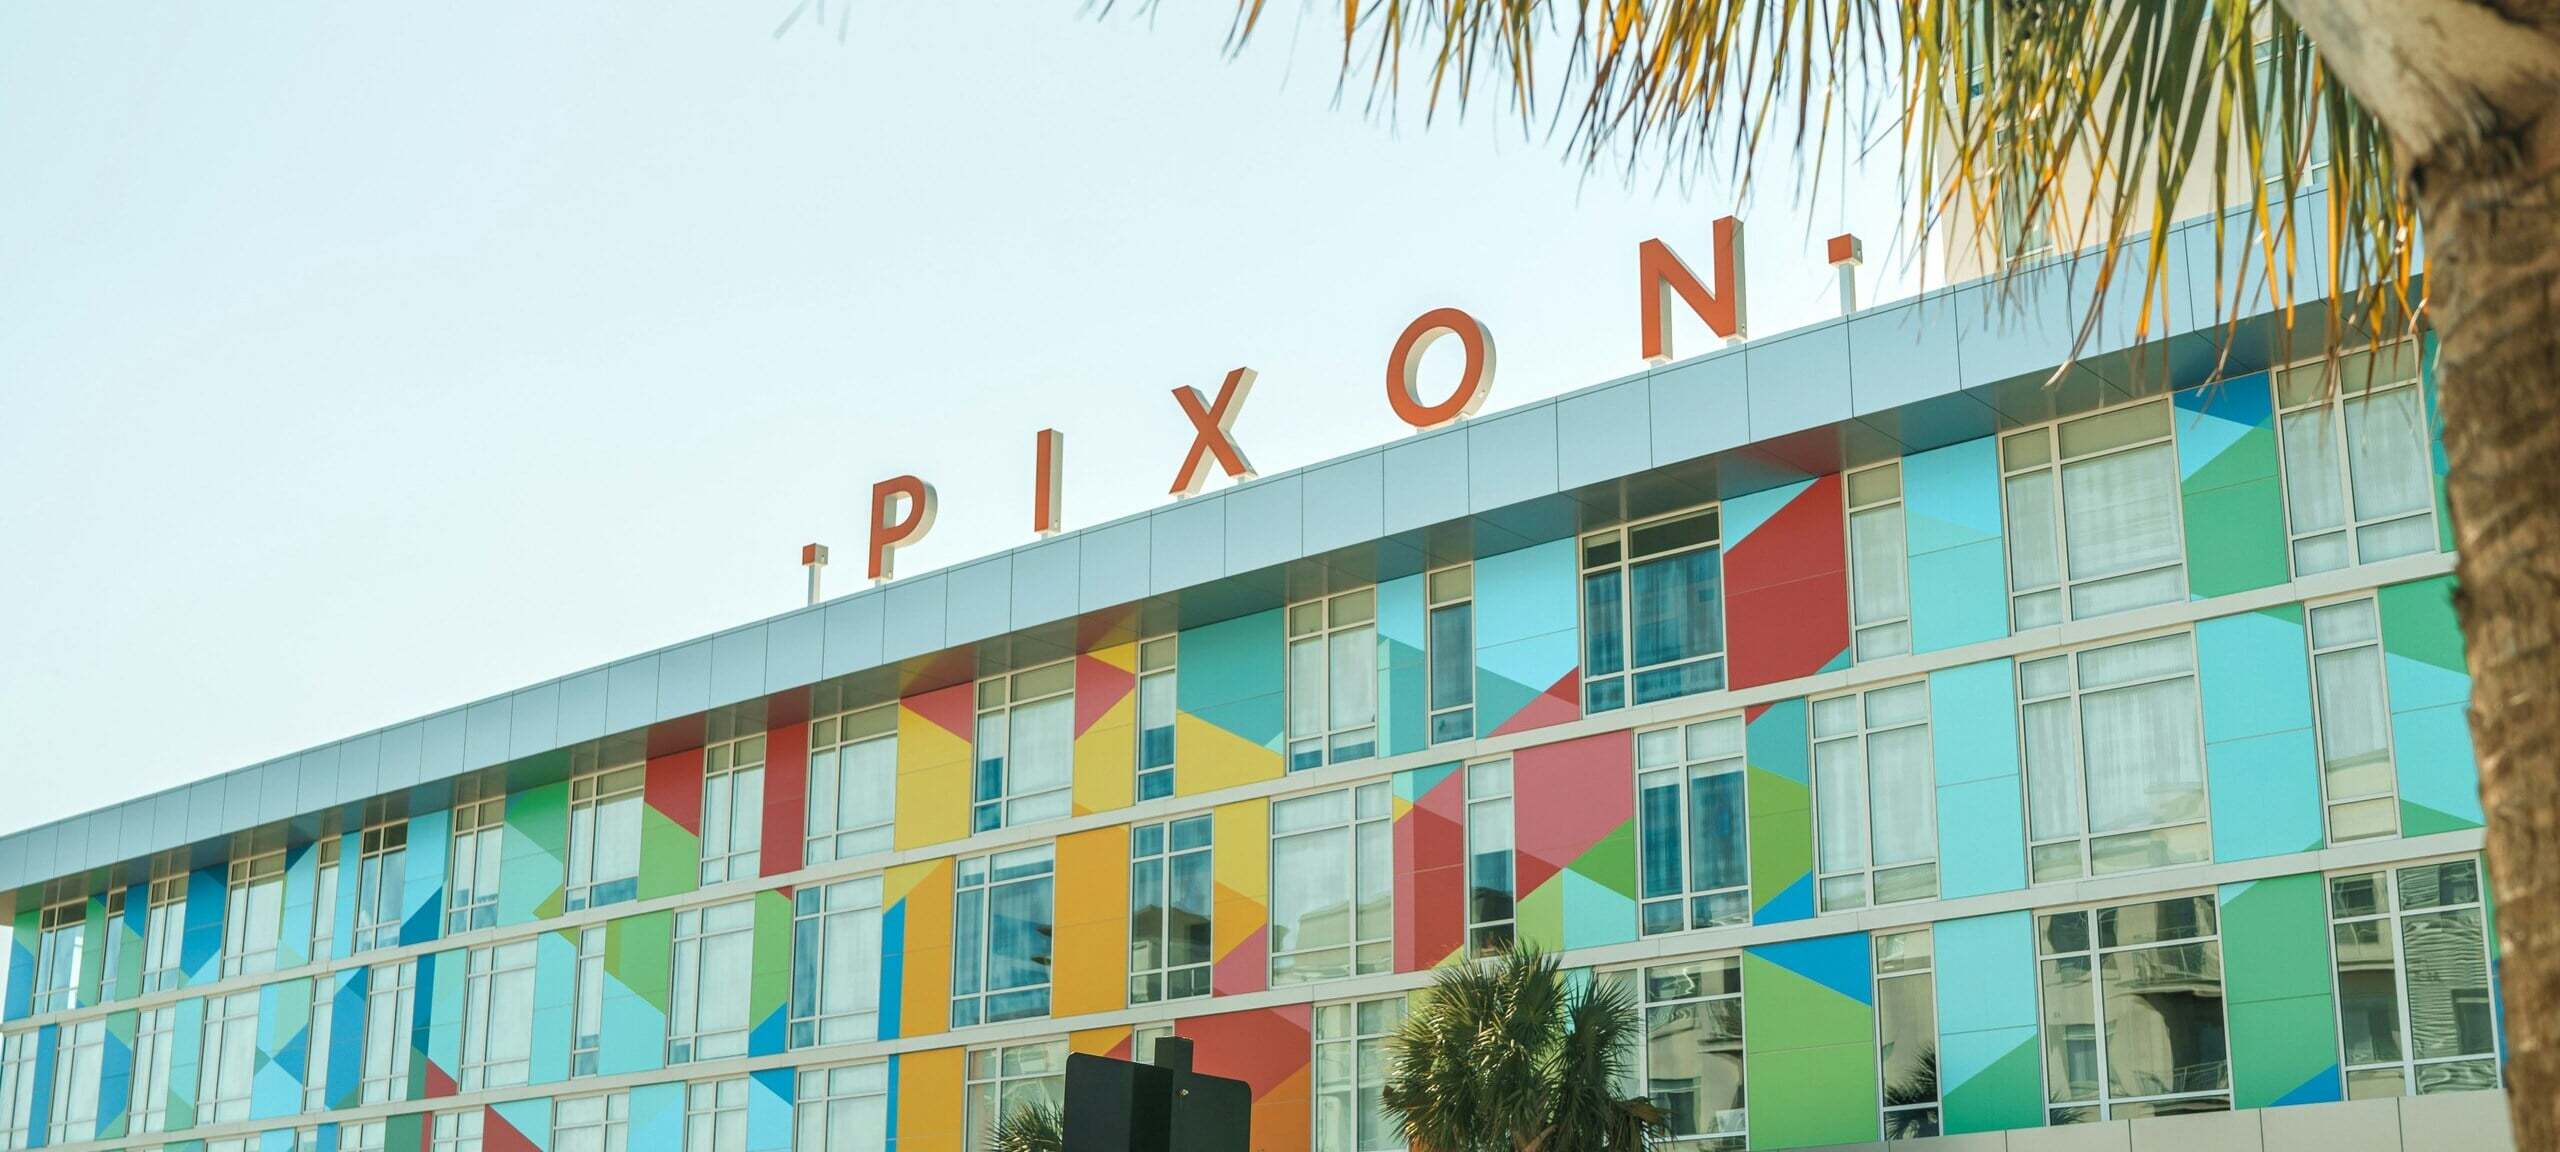 The Pixon luxury apartment building in Lake Nona, Florida. Photo by Eric Ardito on Unsplash